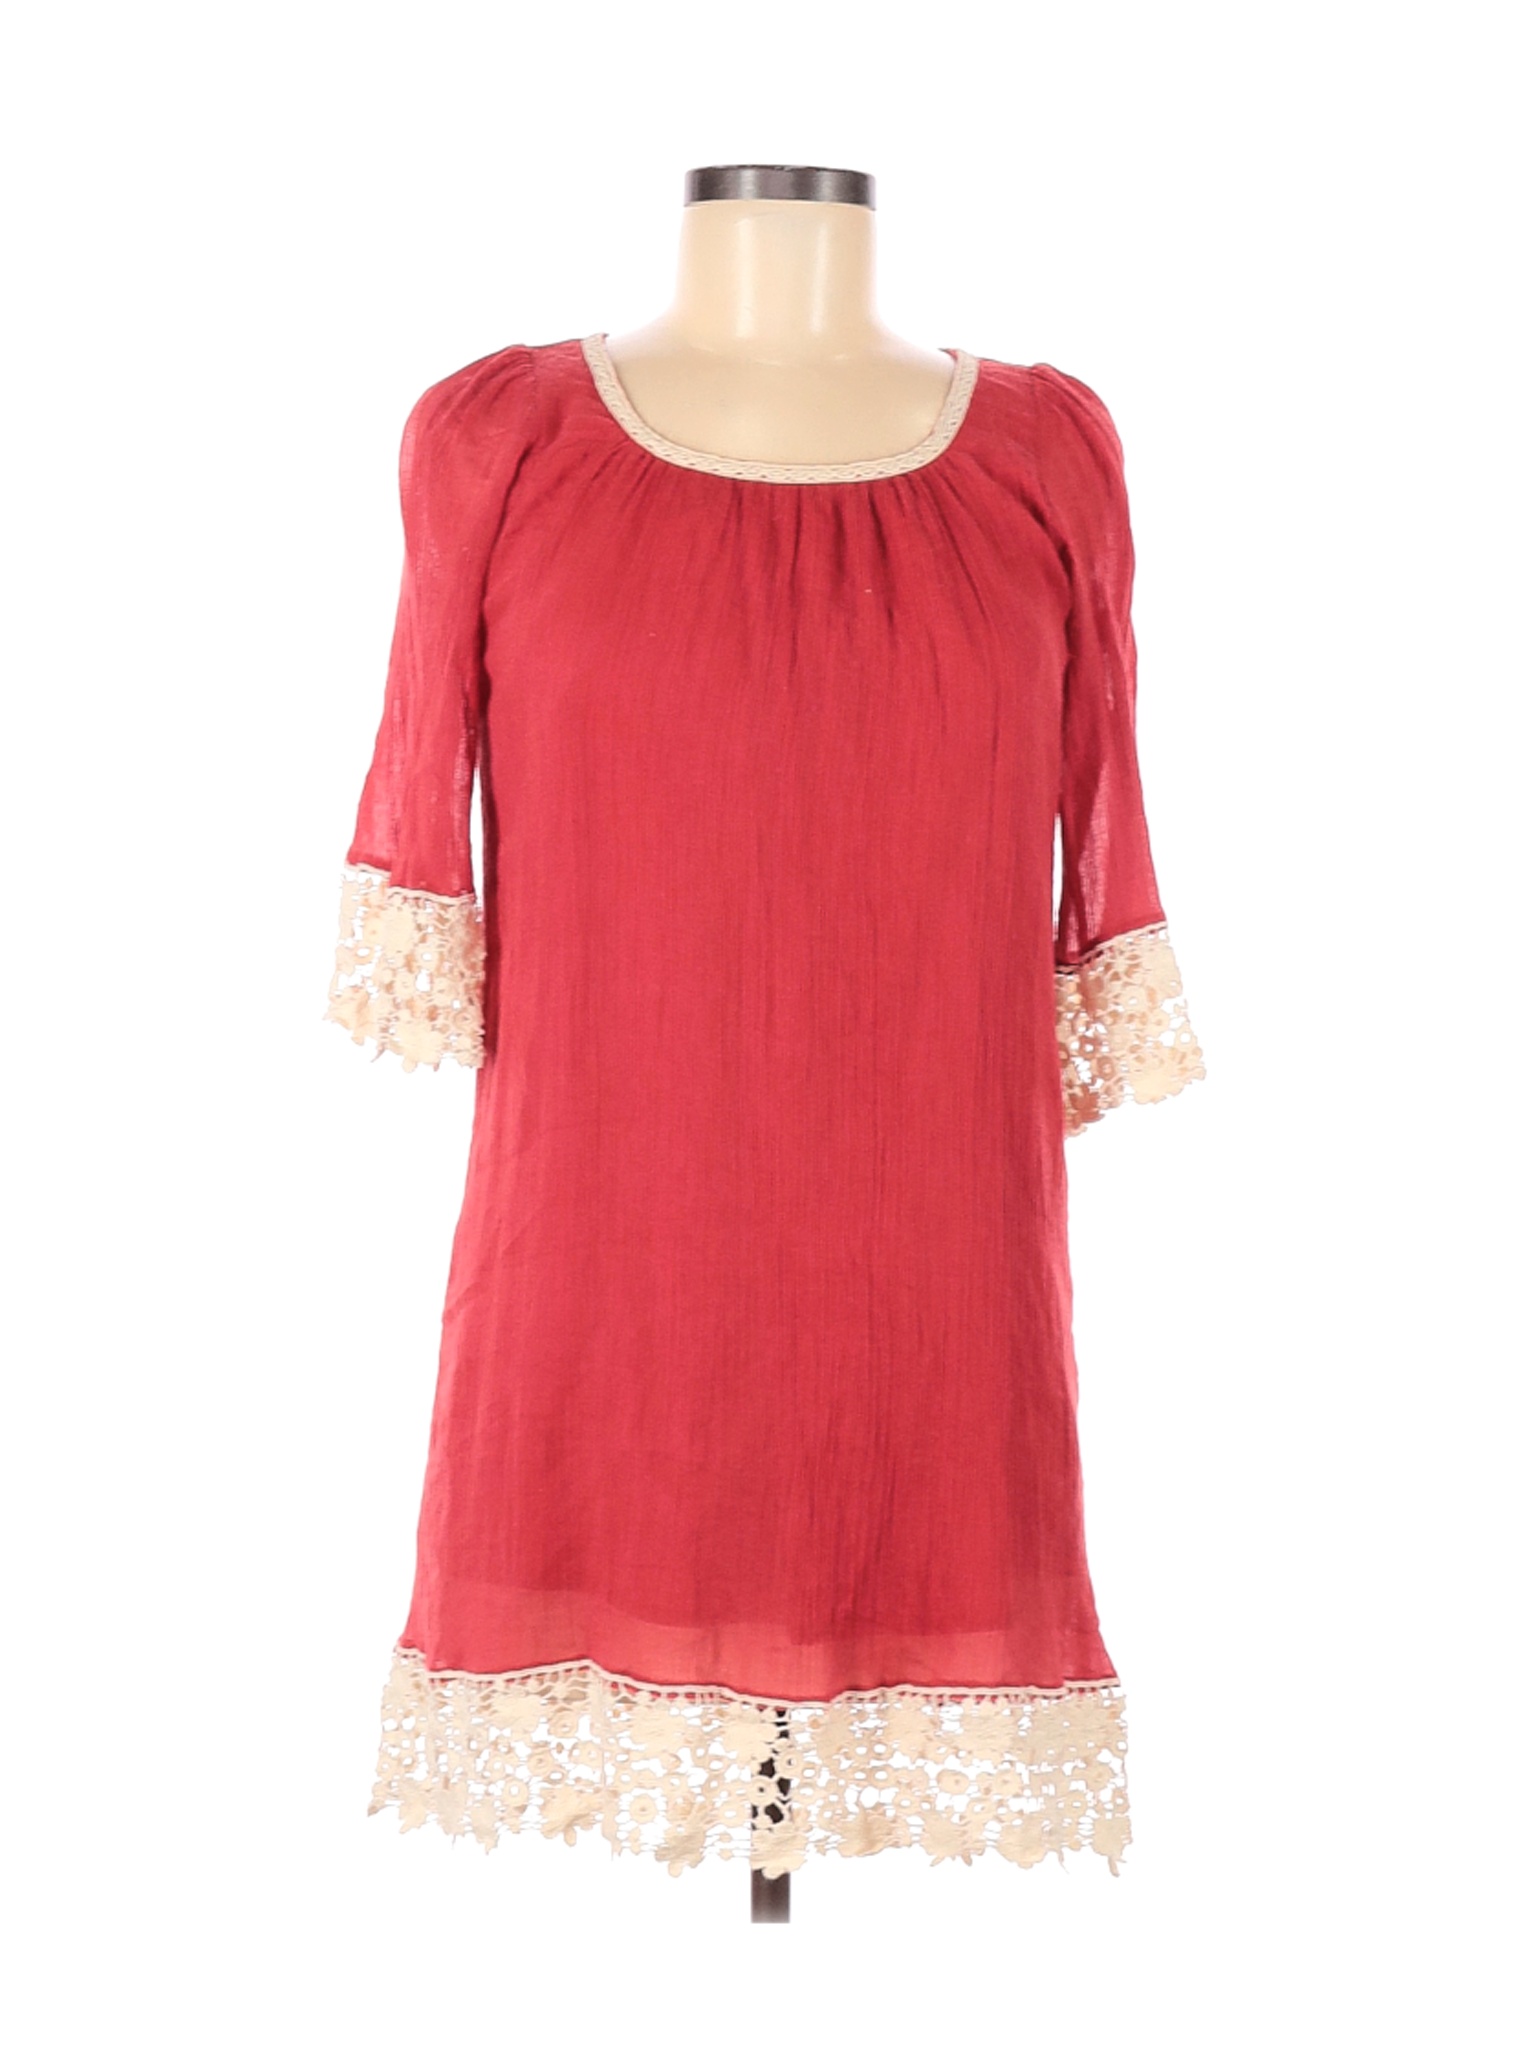 Umgee Women Red Casual Dress S | eBay